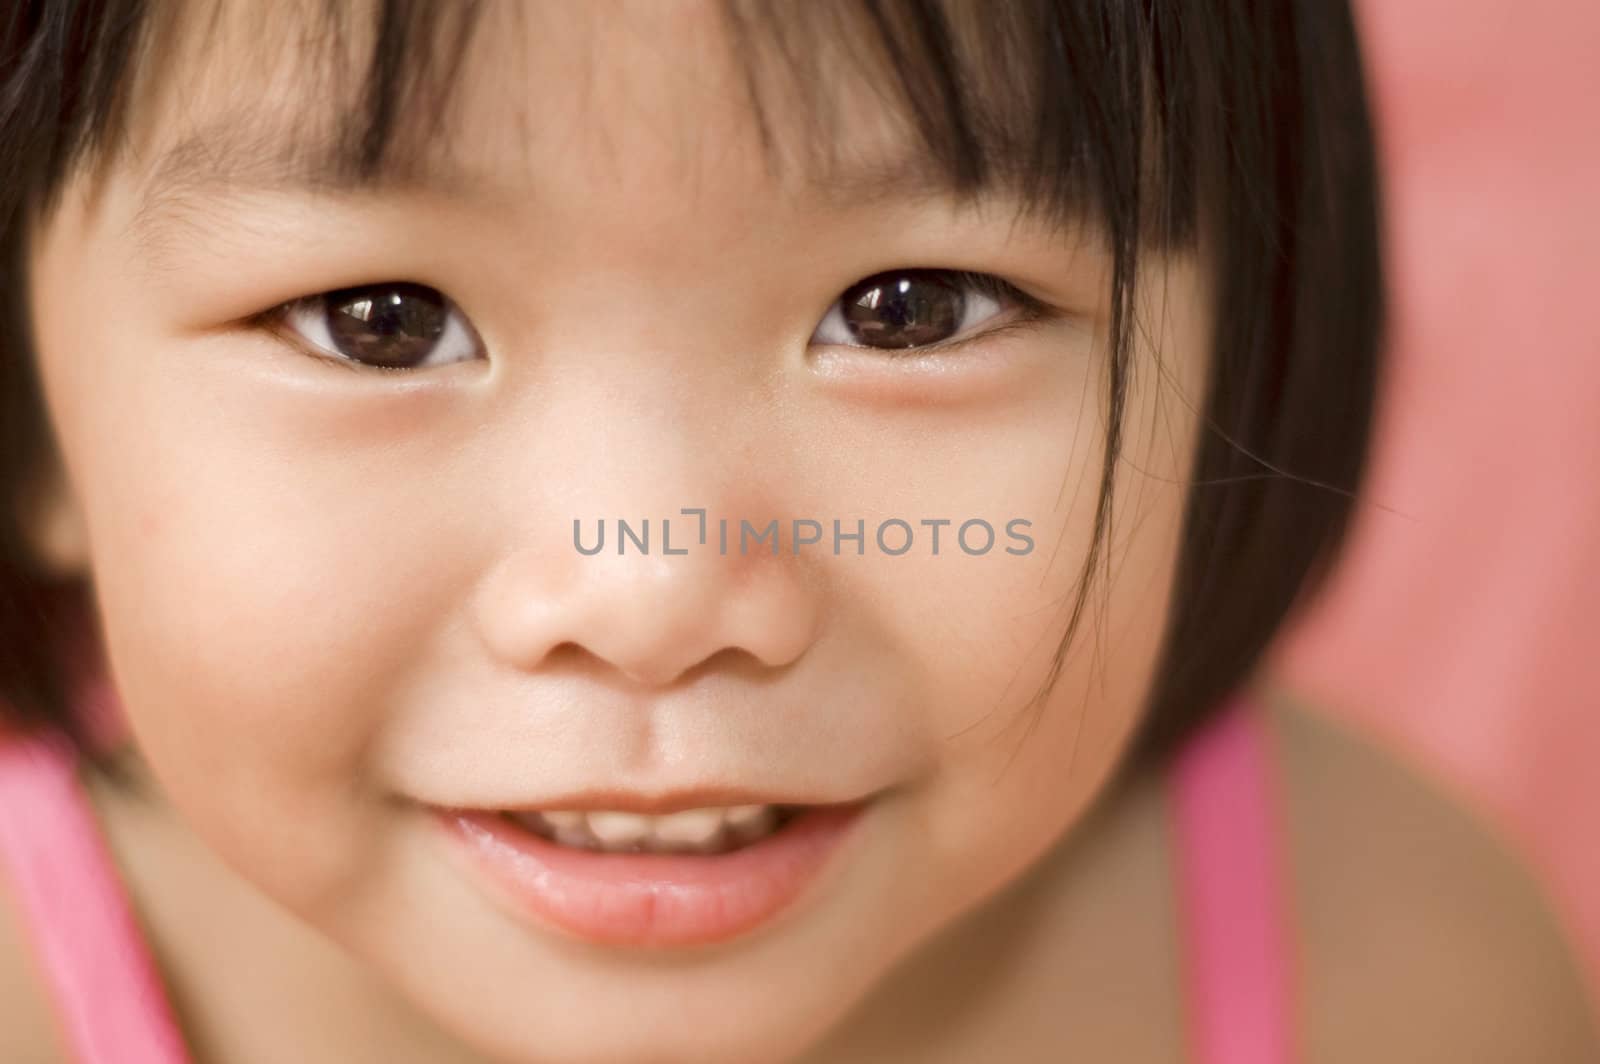 Portrait of a little Asian girl 